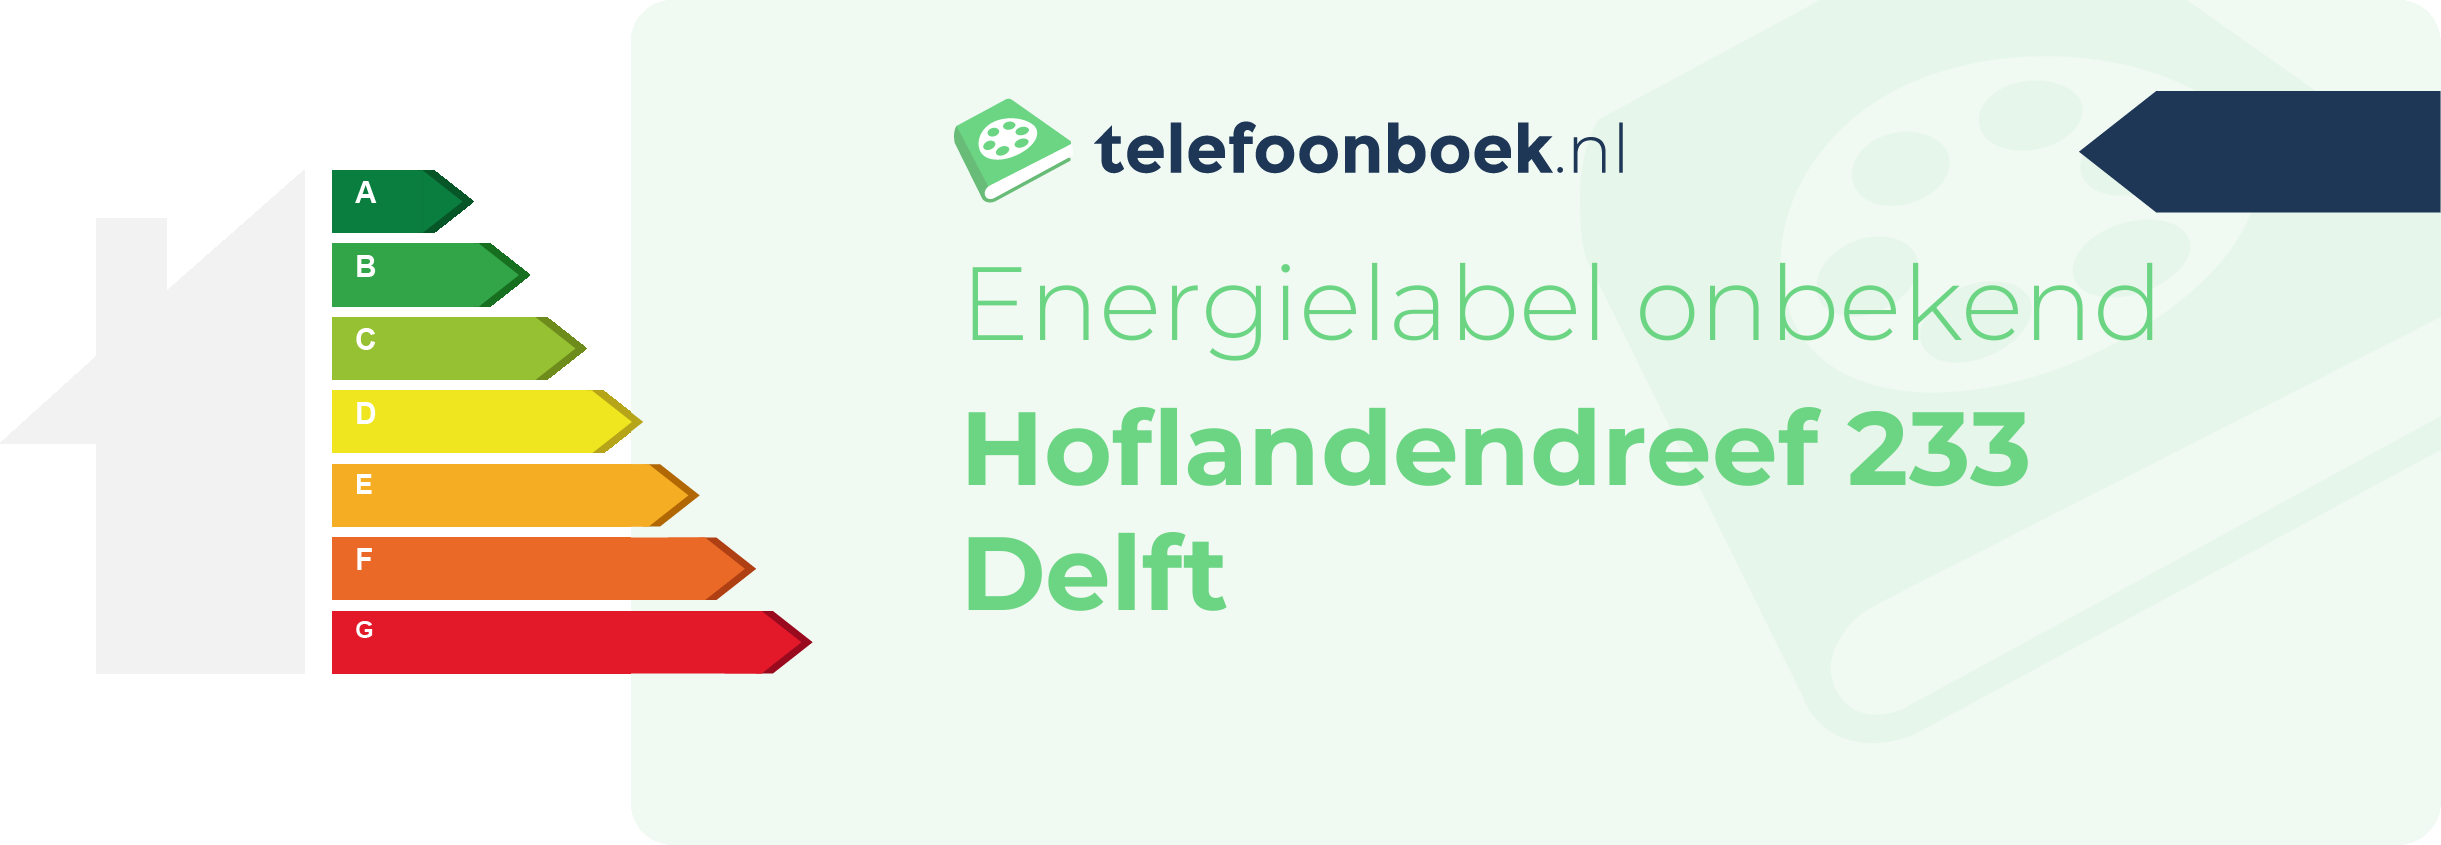 Energielabel Hoflandendreef 233 Delft